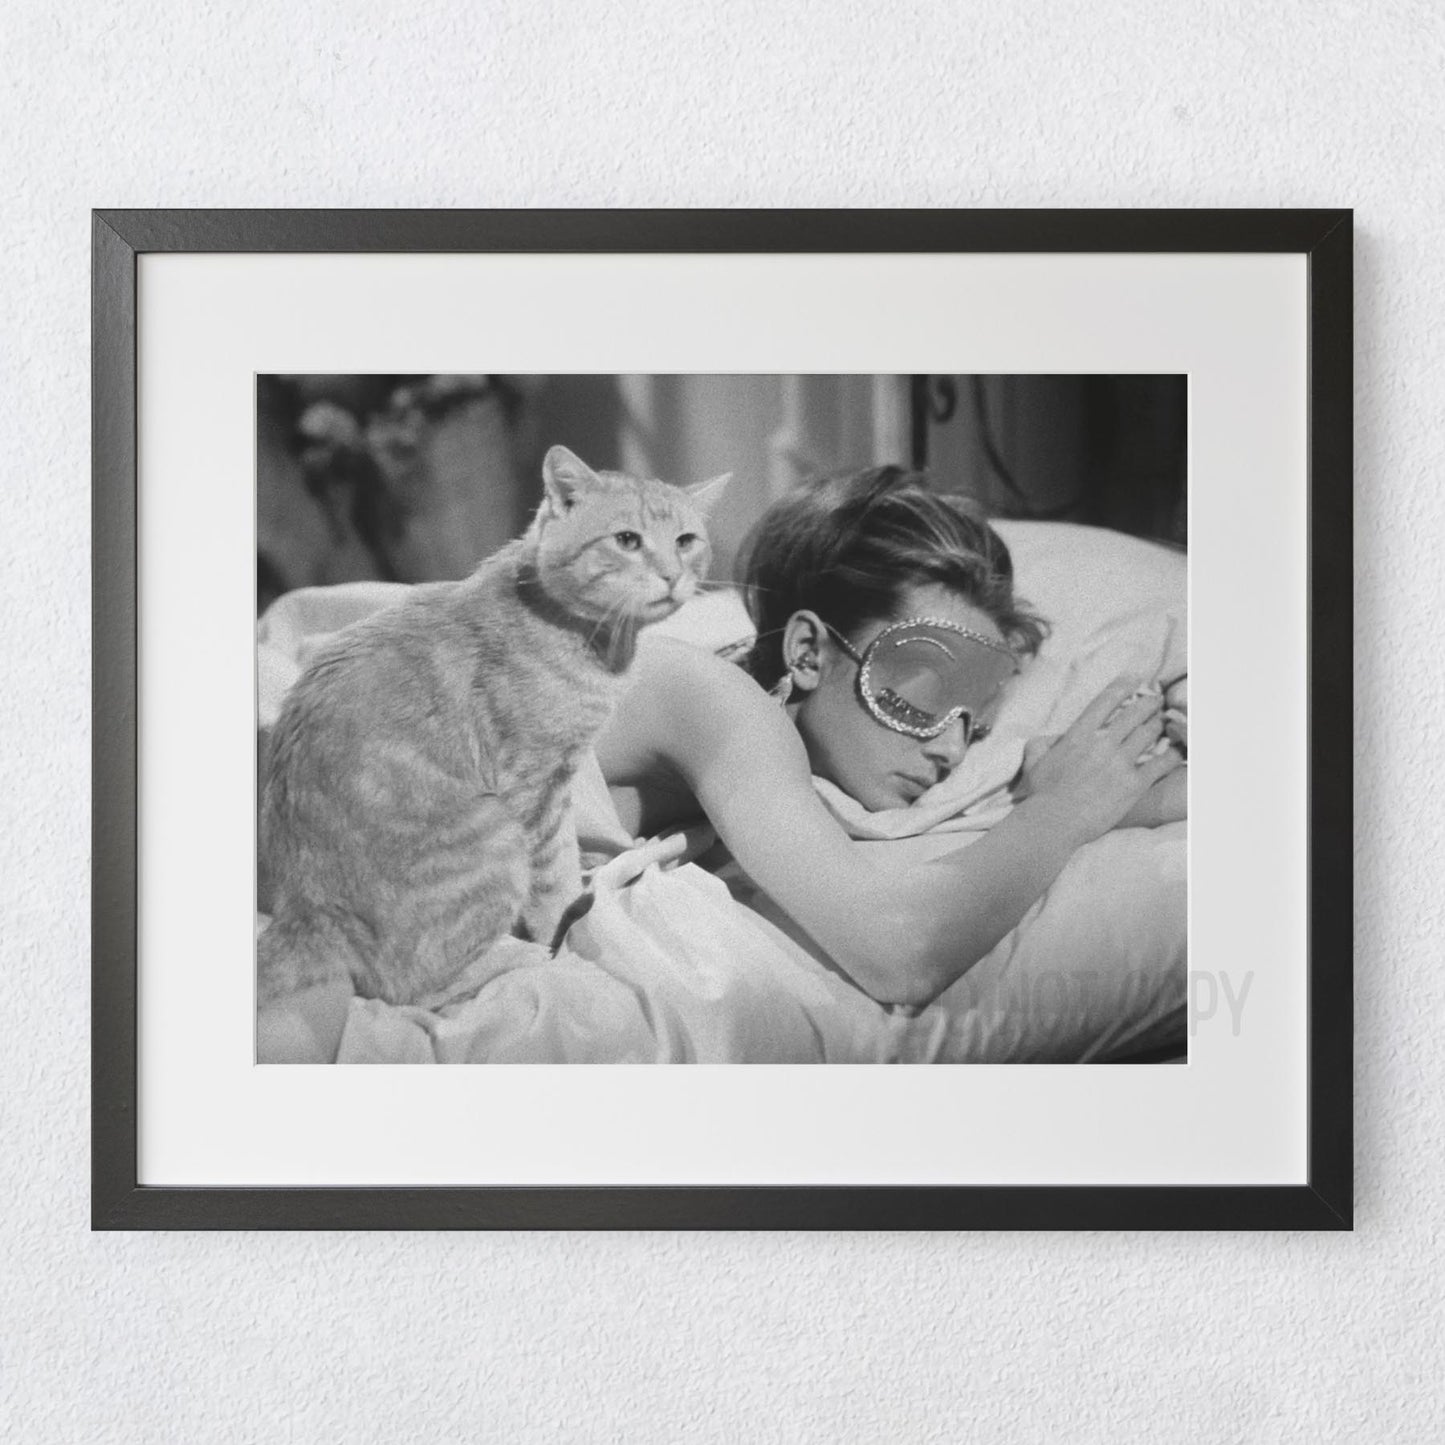 Audrey Hepburn Sleeping With Cat, Breakfast at Tiffany's 1961